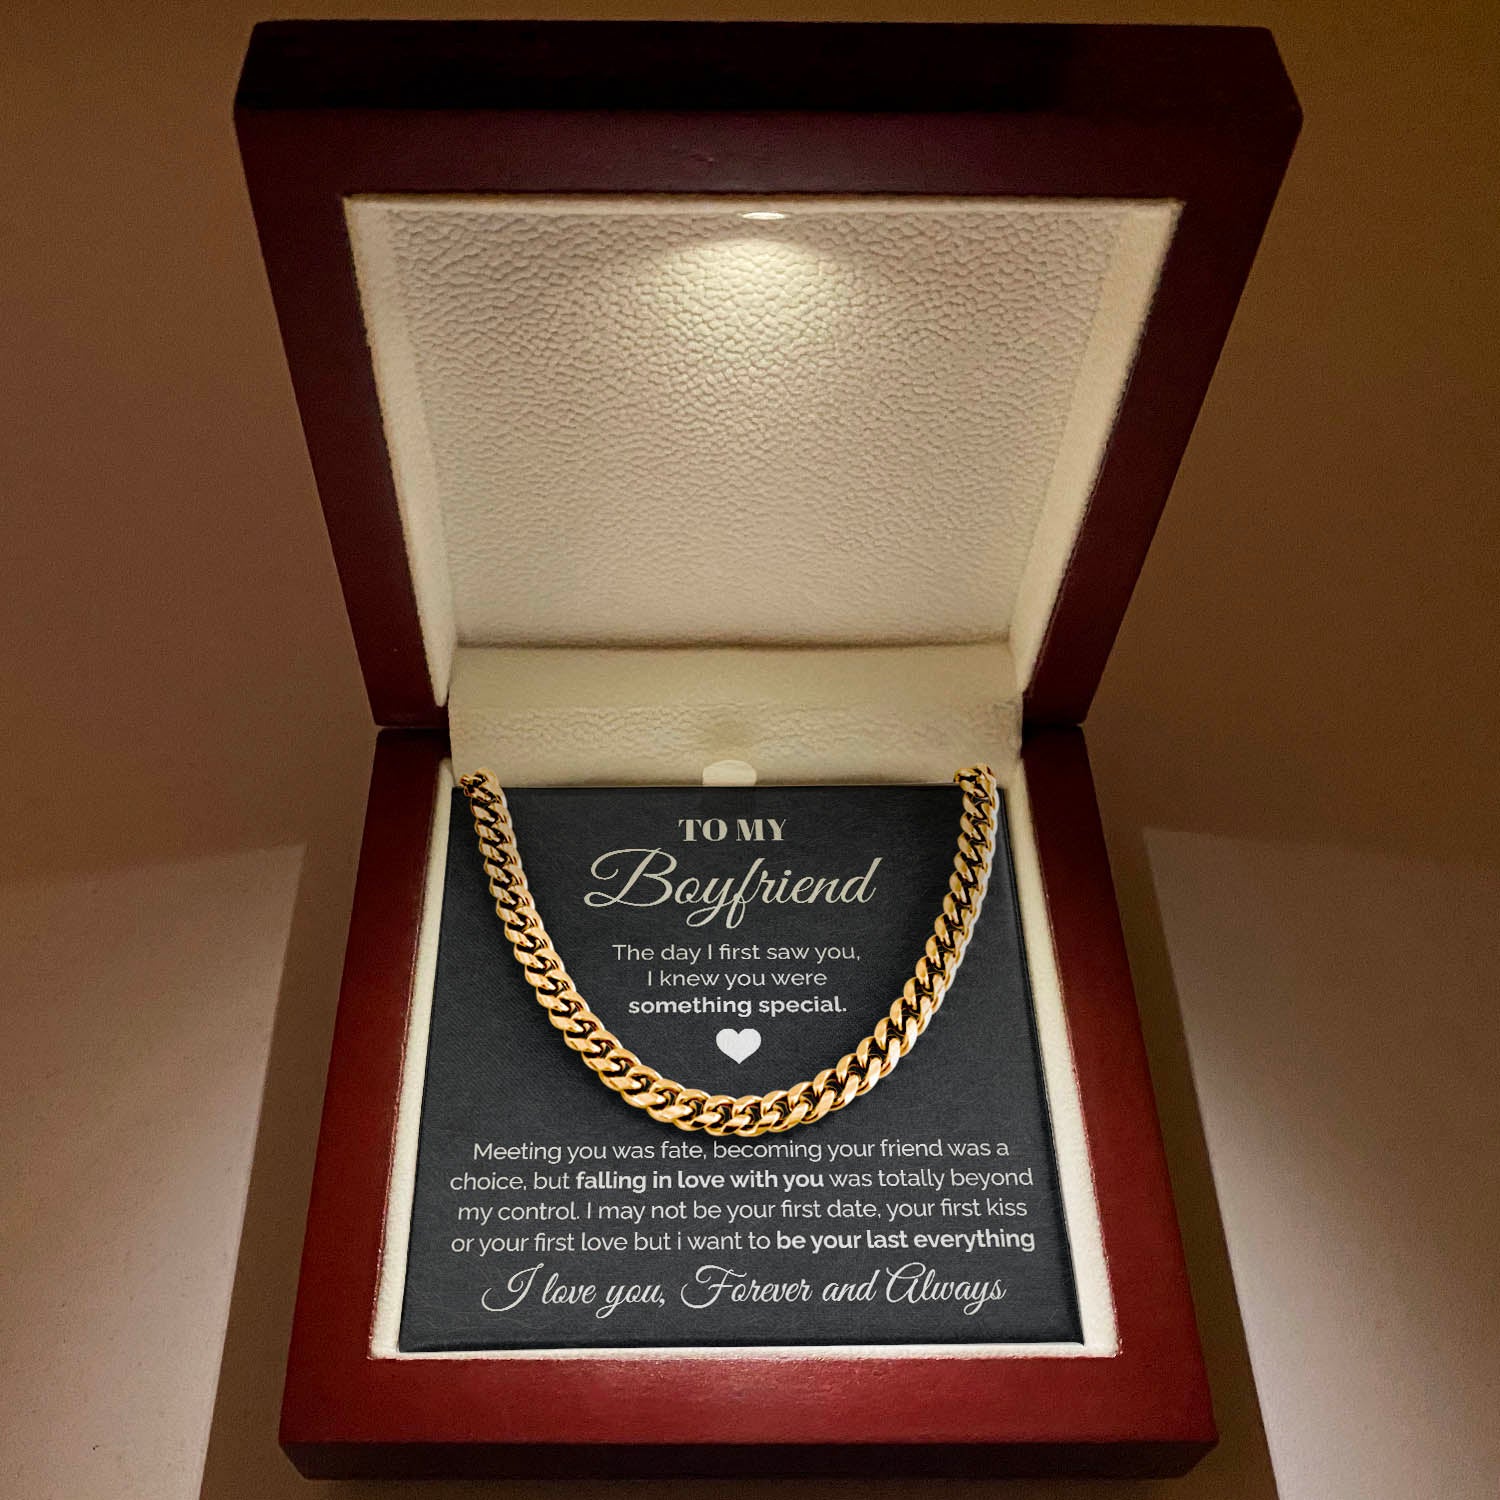 ShineOn Fulfillment Jewelry 14K Yellow Gold Finish / Luxury Box To my Boyfriend - Meeting you was fate - Cuban Link Chain